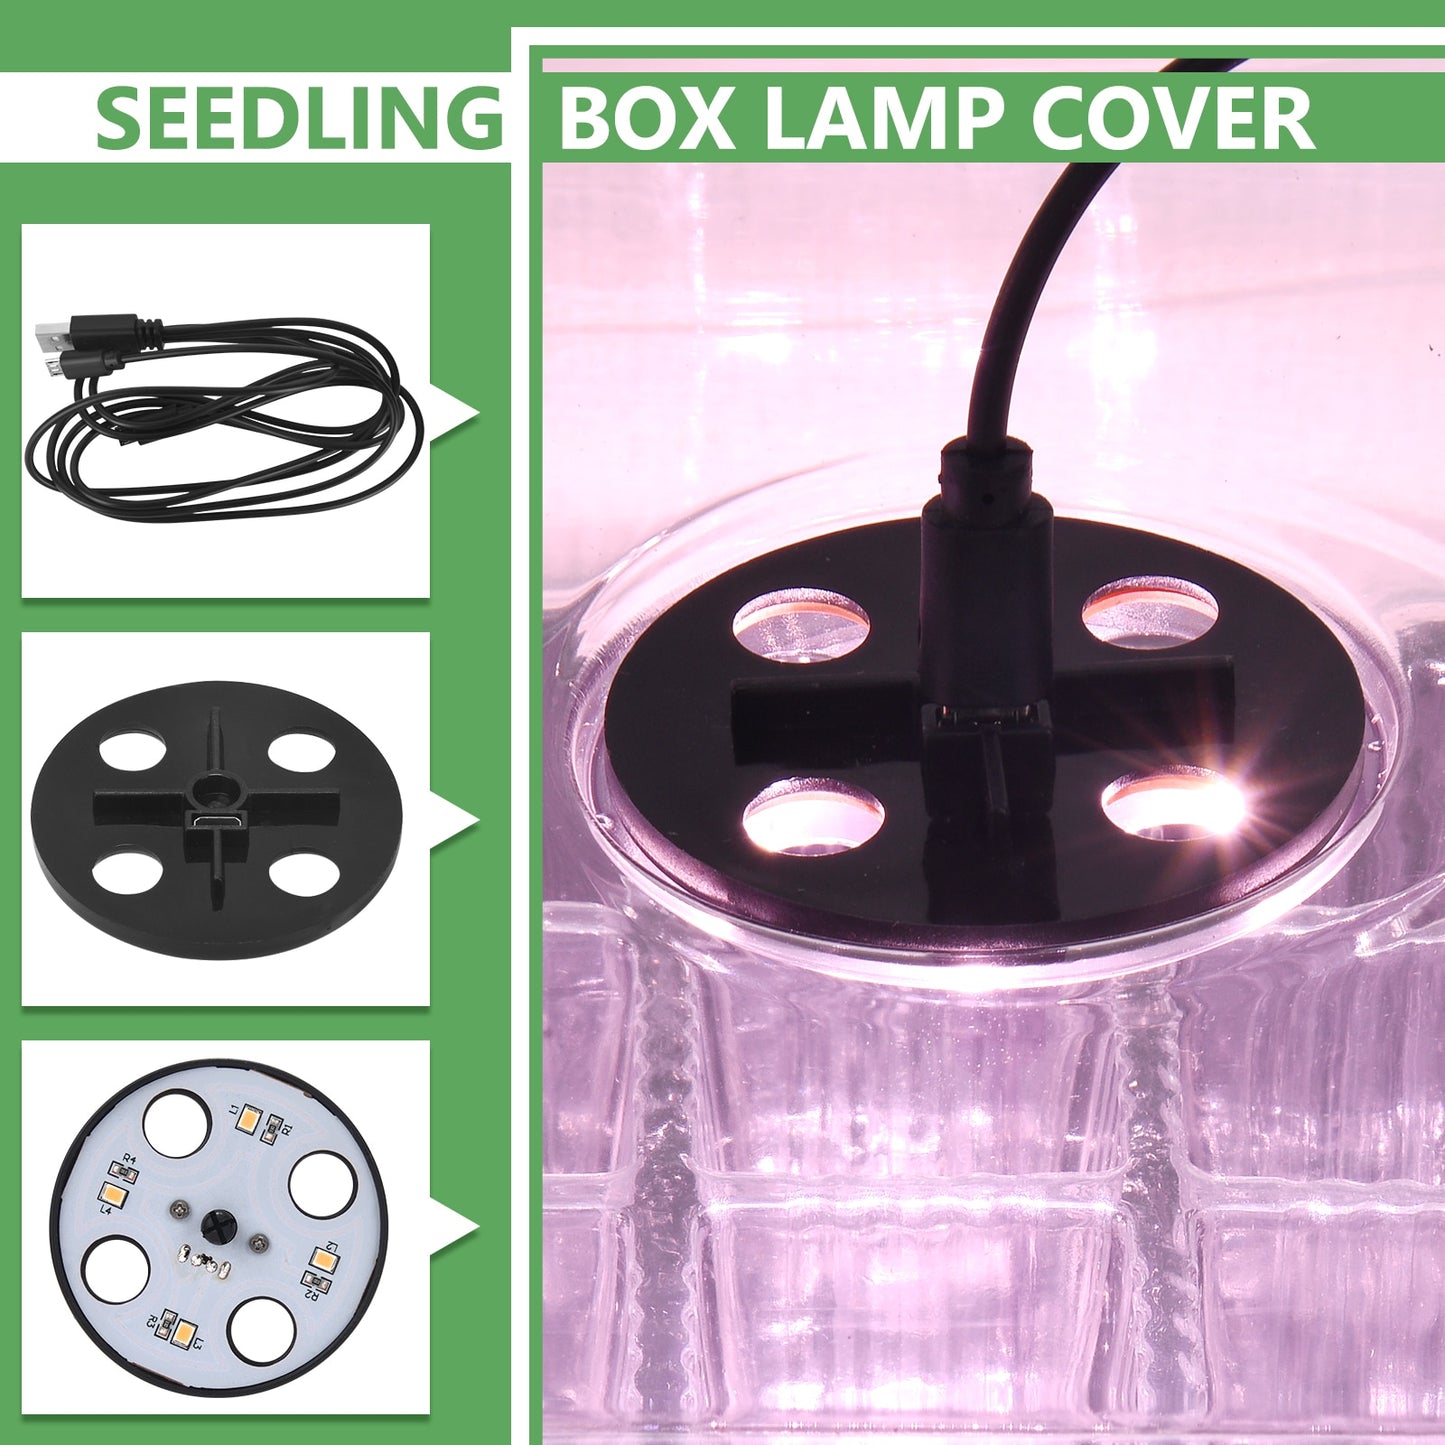 Plant LED Lights For Seed Starter Trays